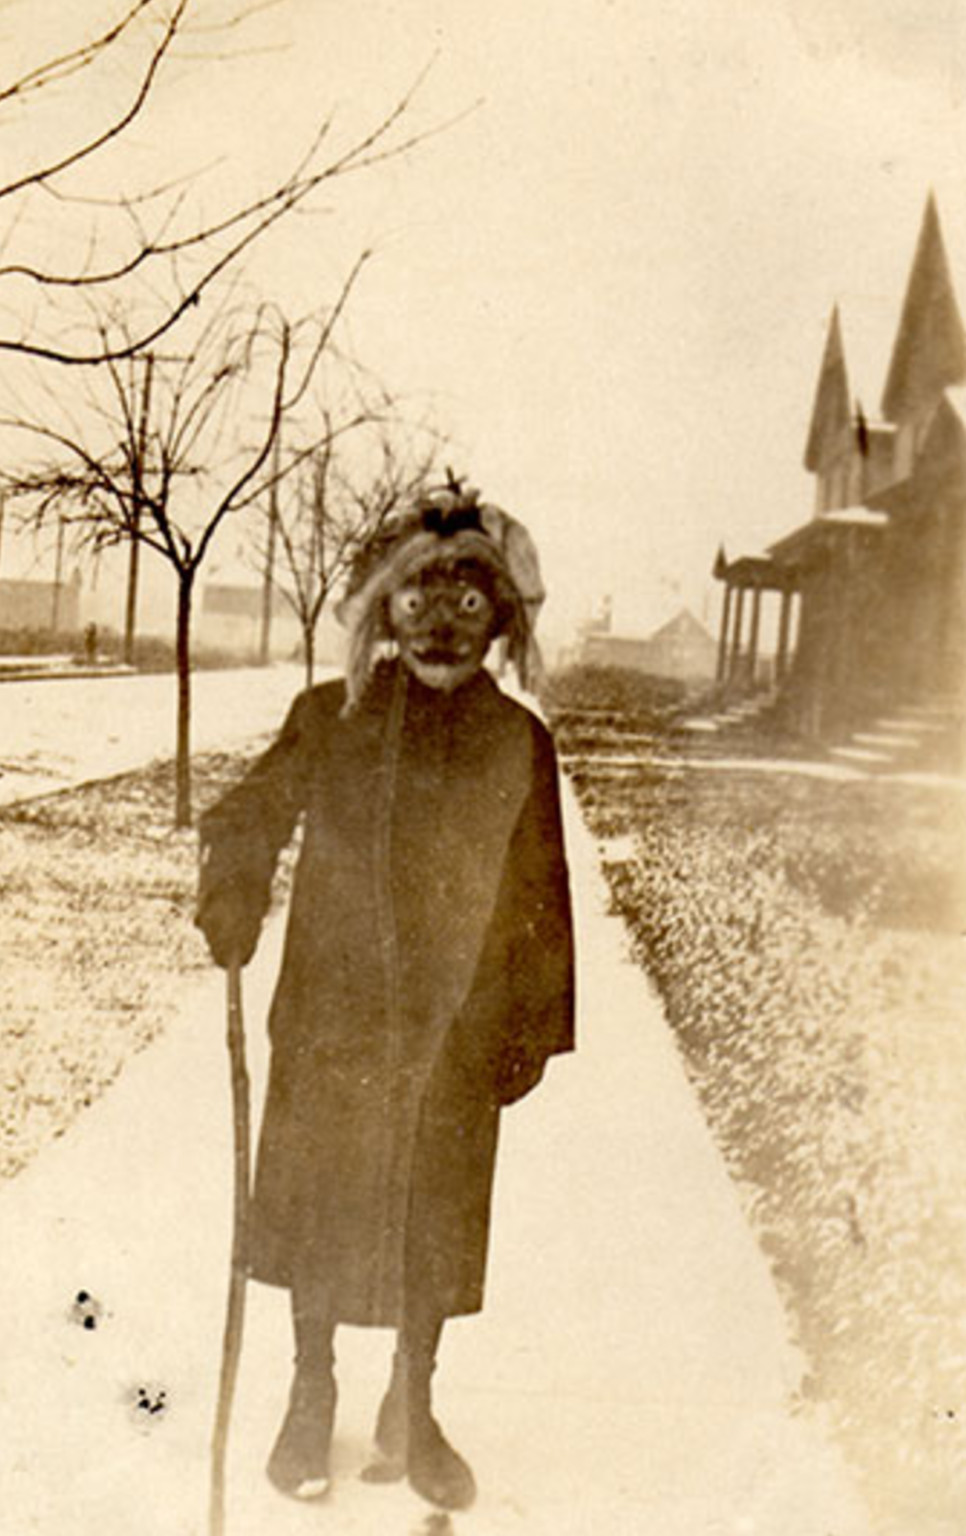 Century-Old Photos of Spooky Vintage Halloween Costumes | PetaPixel